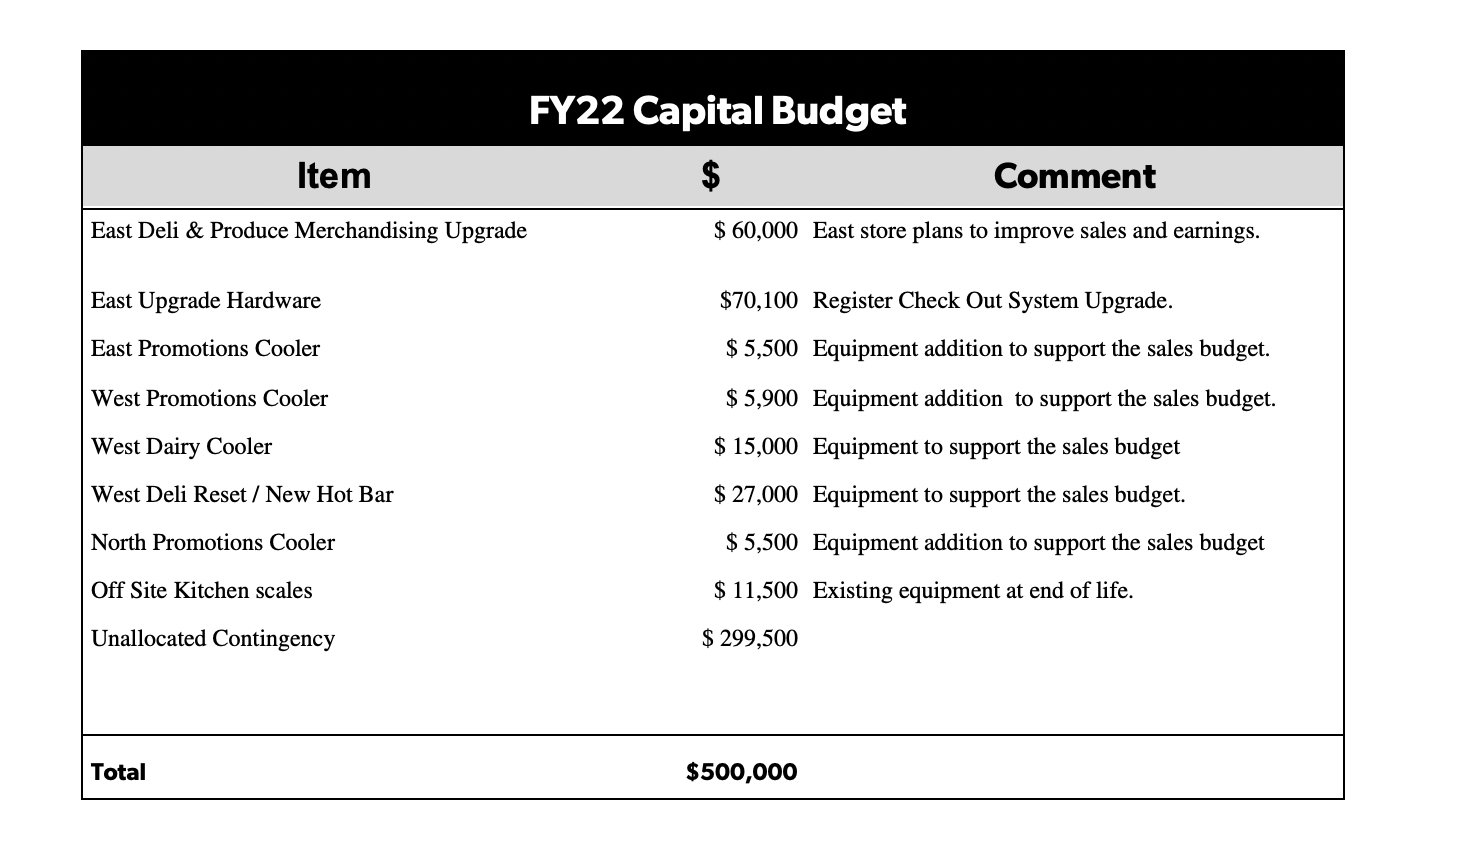 FY22 capital budget